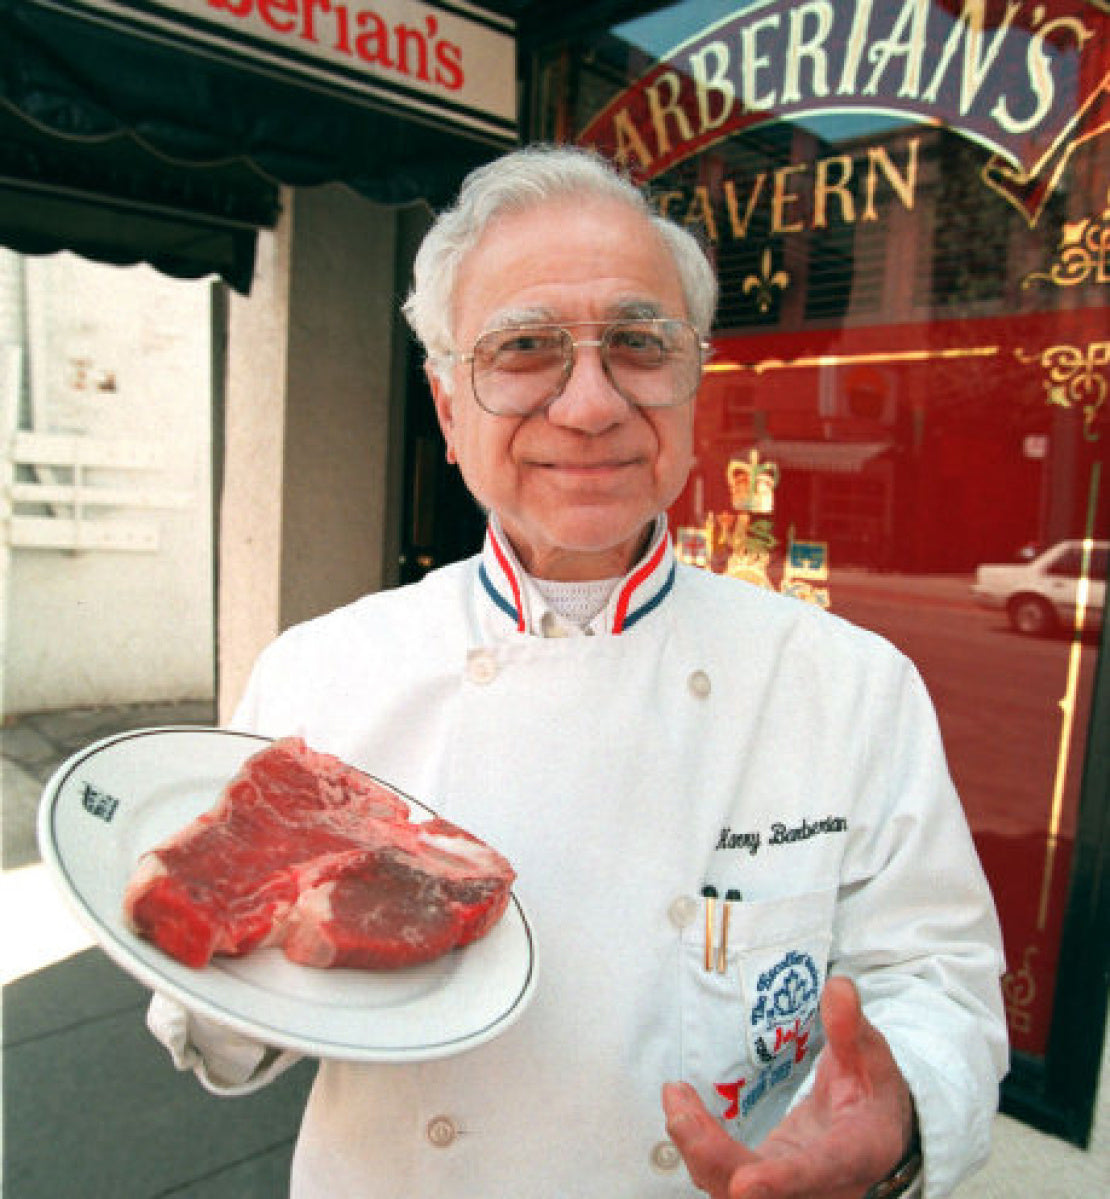 Barberian's Steak Spice